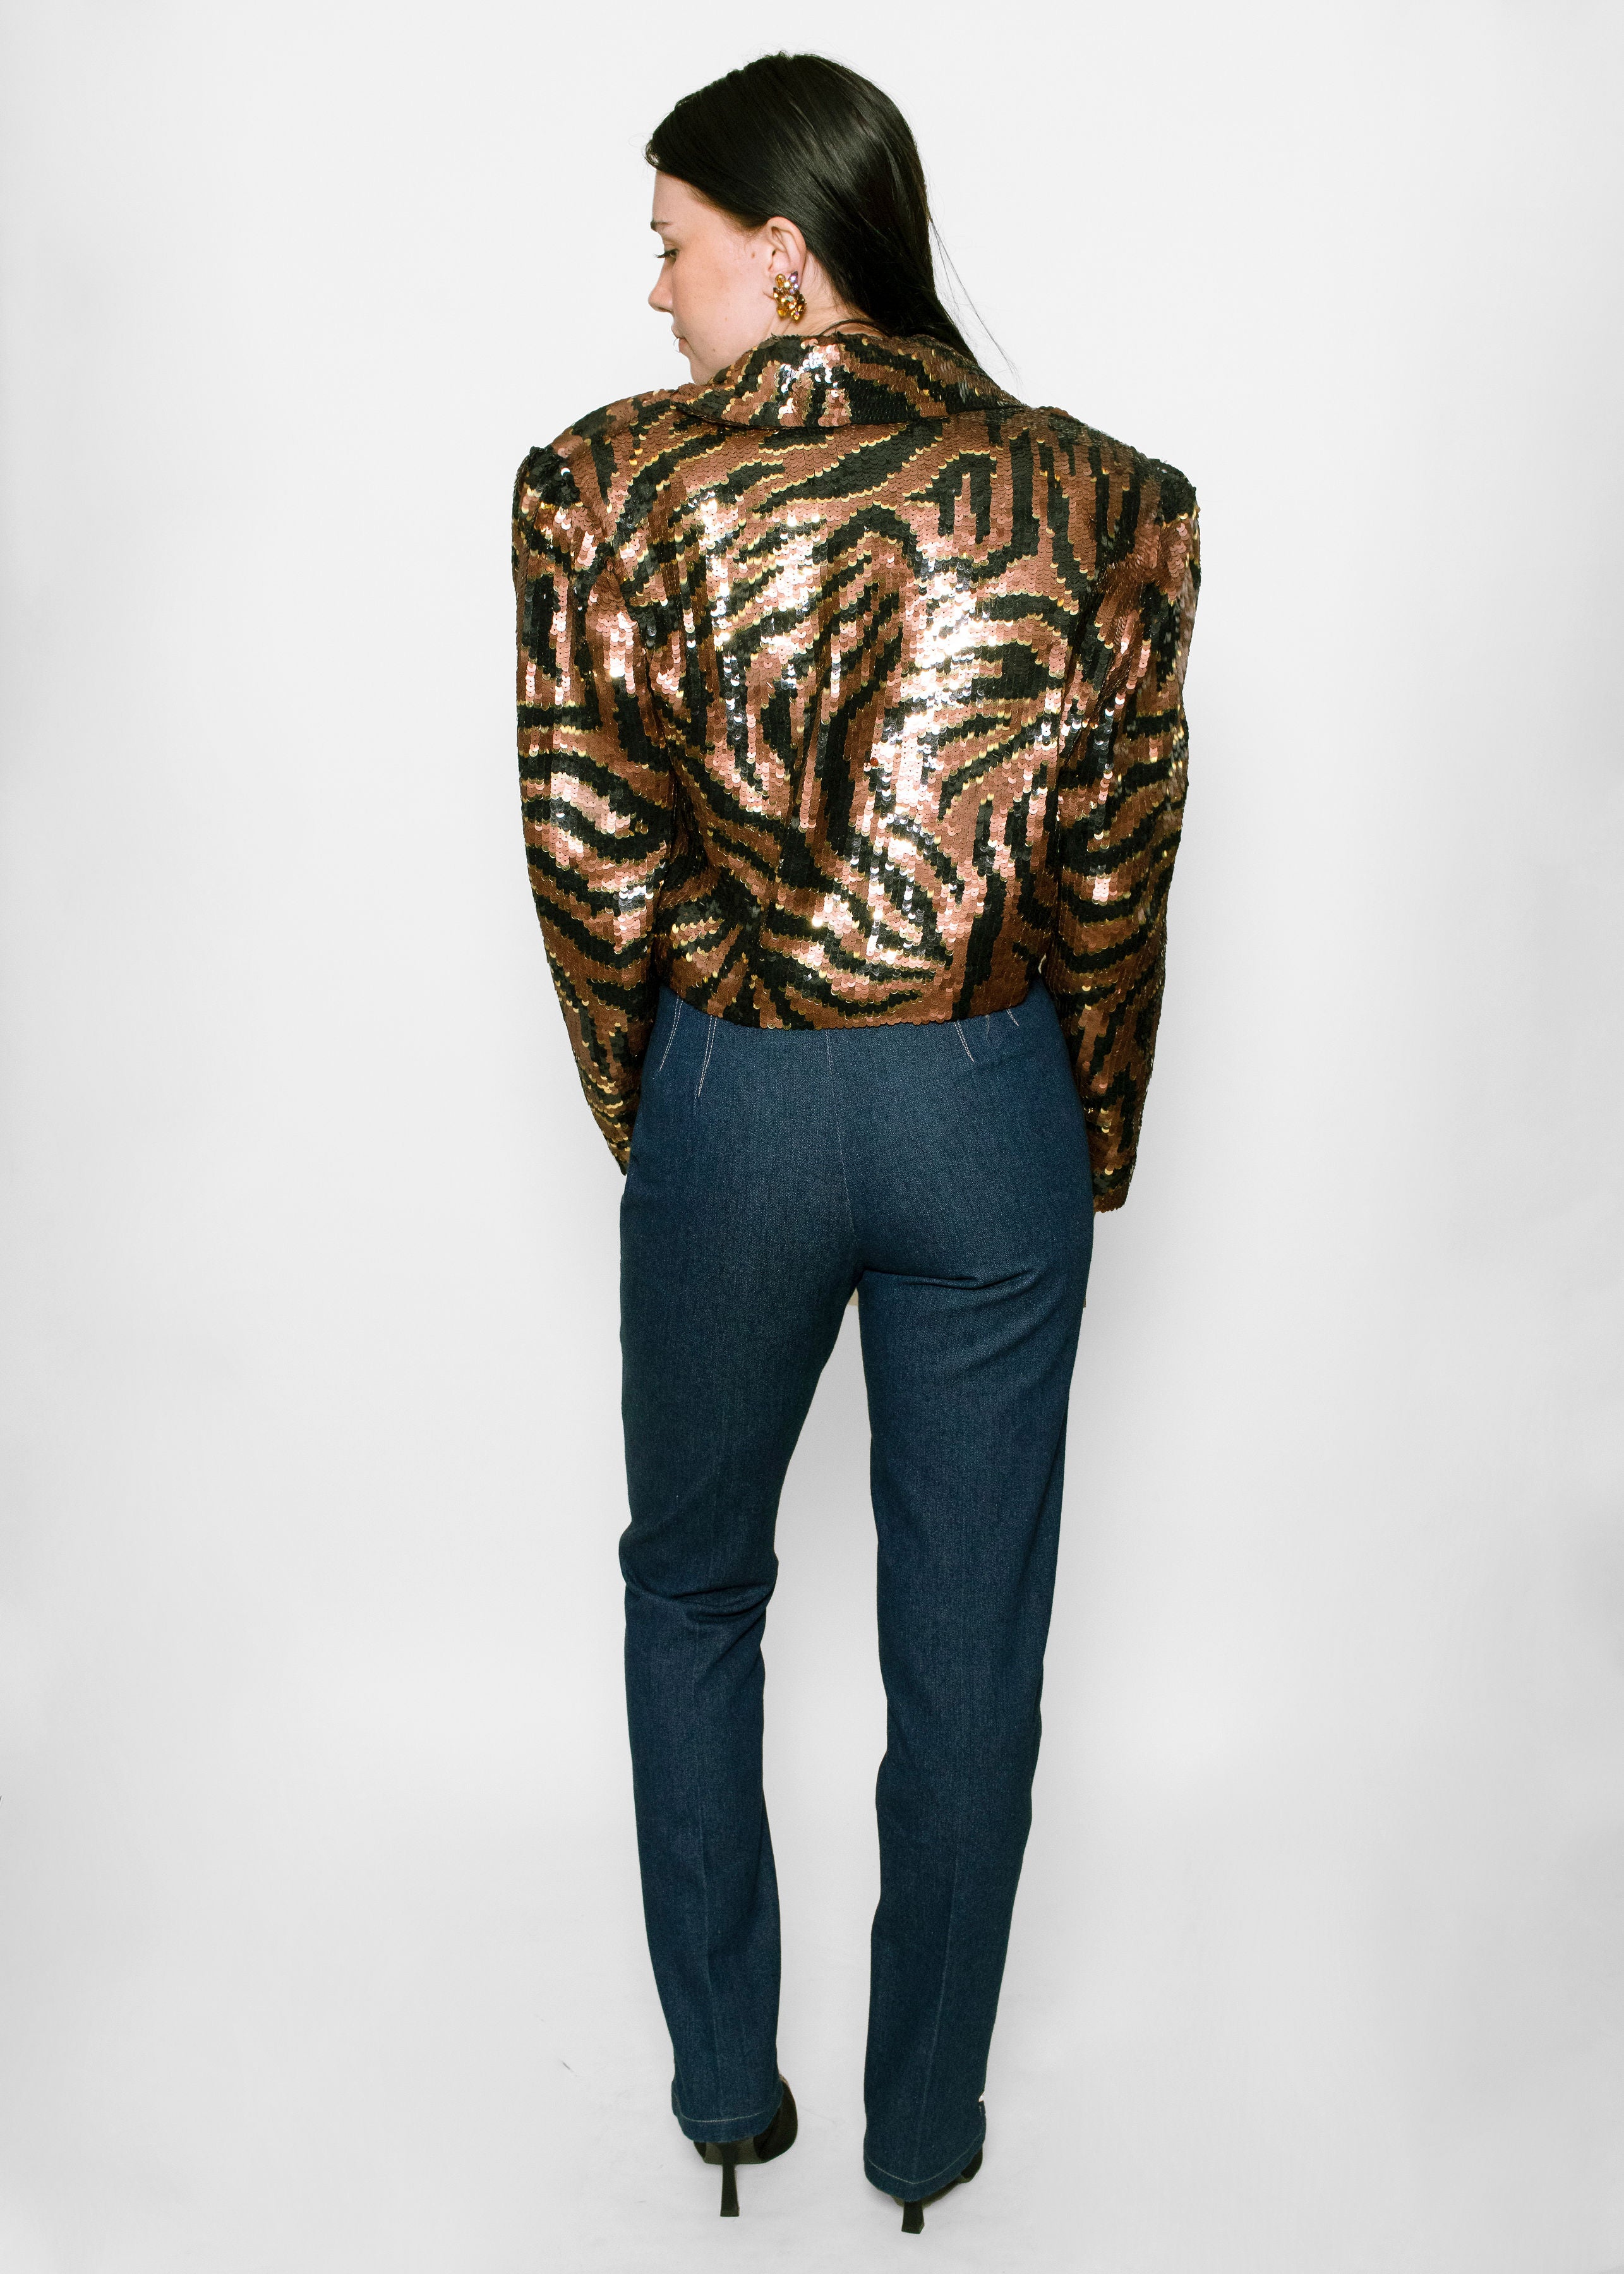 Sequin Zebra Print Cropped Jacket